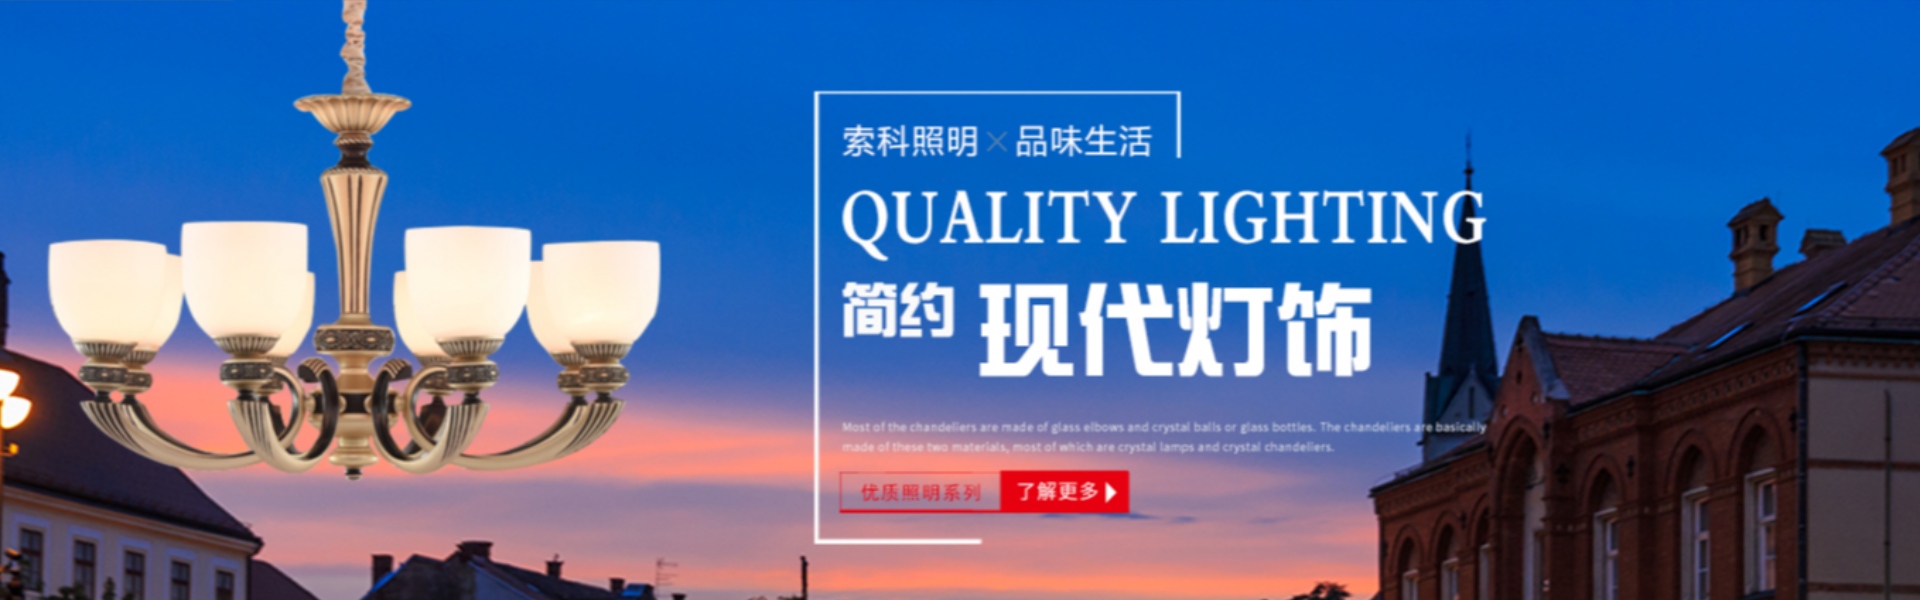 hjemmebelysning, udendørs belysning, solbelysning,Zhongshan Suoke Lighting Electric Co., Ltd.